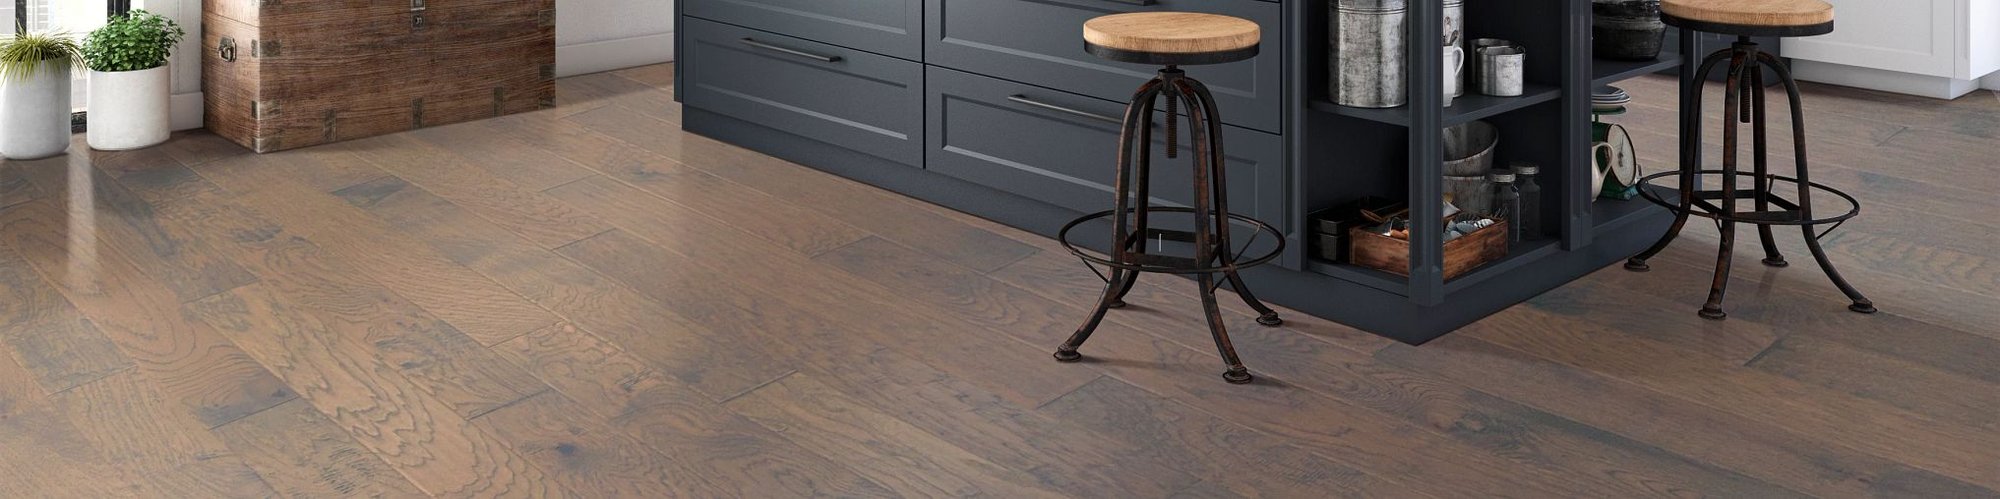 bar stools in kitchen with hardwood flooring